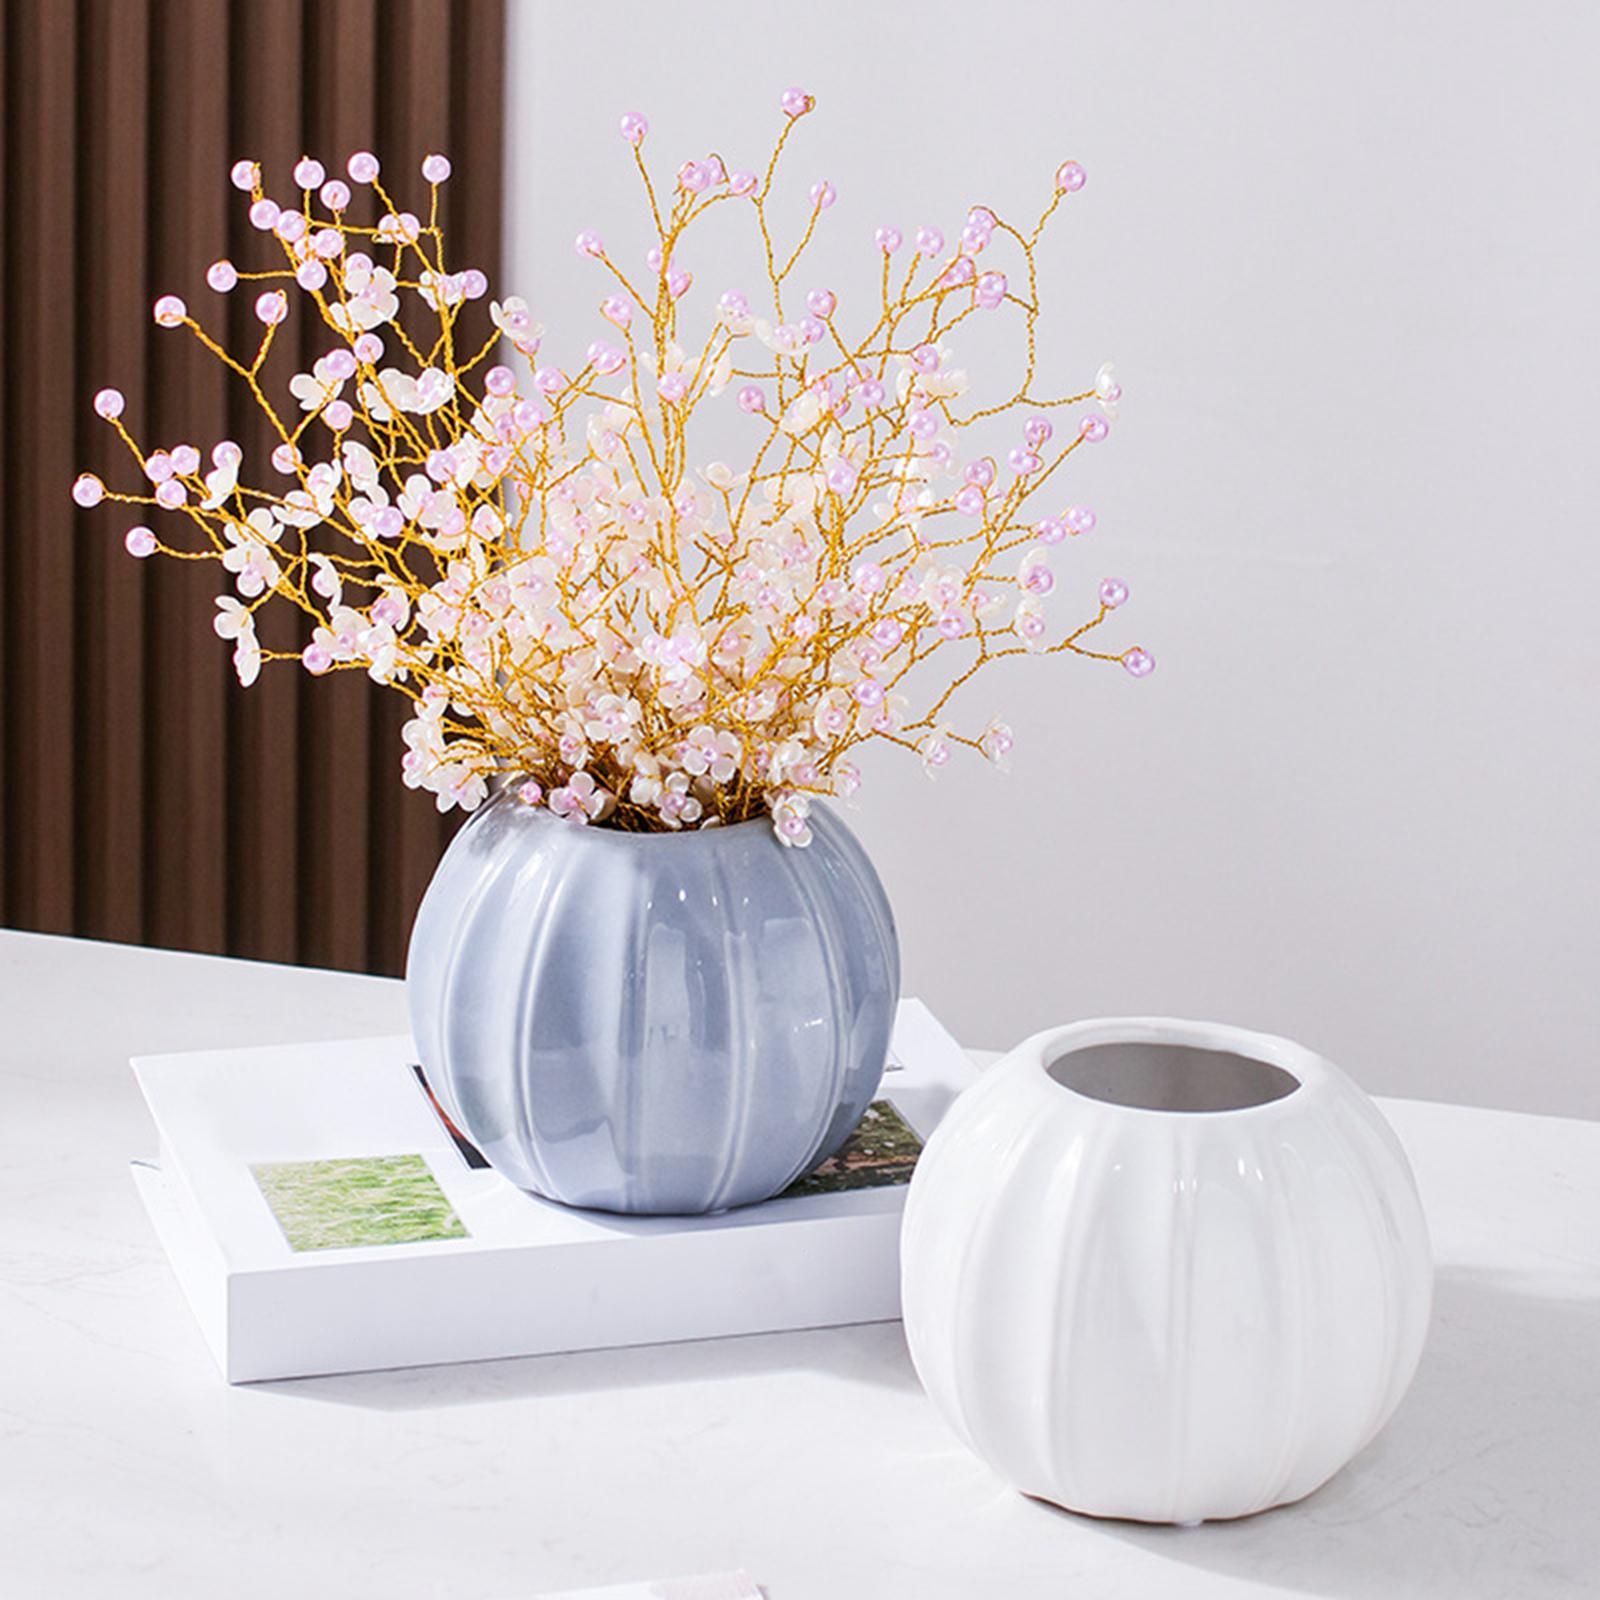 Flower Vase Ceramic Vase Home Decor Nordic Decorative Vase Centerpieces Flower Pot Tabletop Vase for Office Farmhouse Kitchen Shelf Entryway